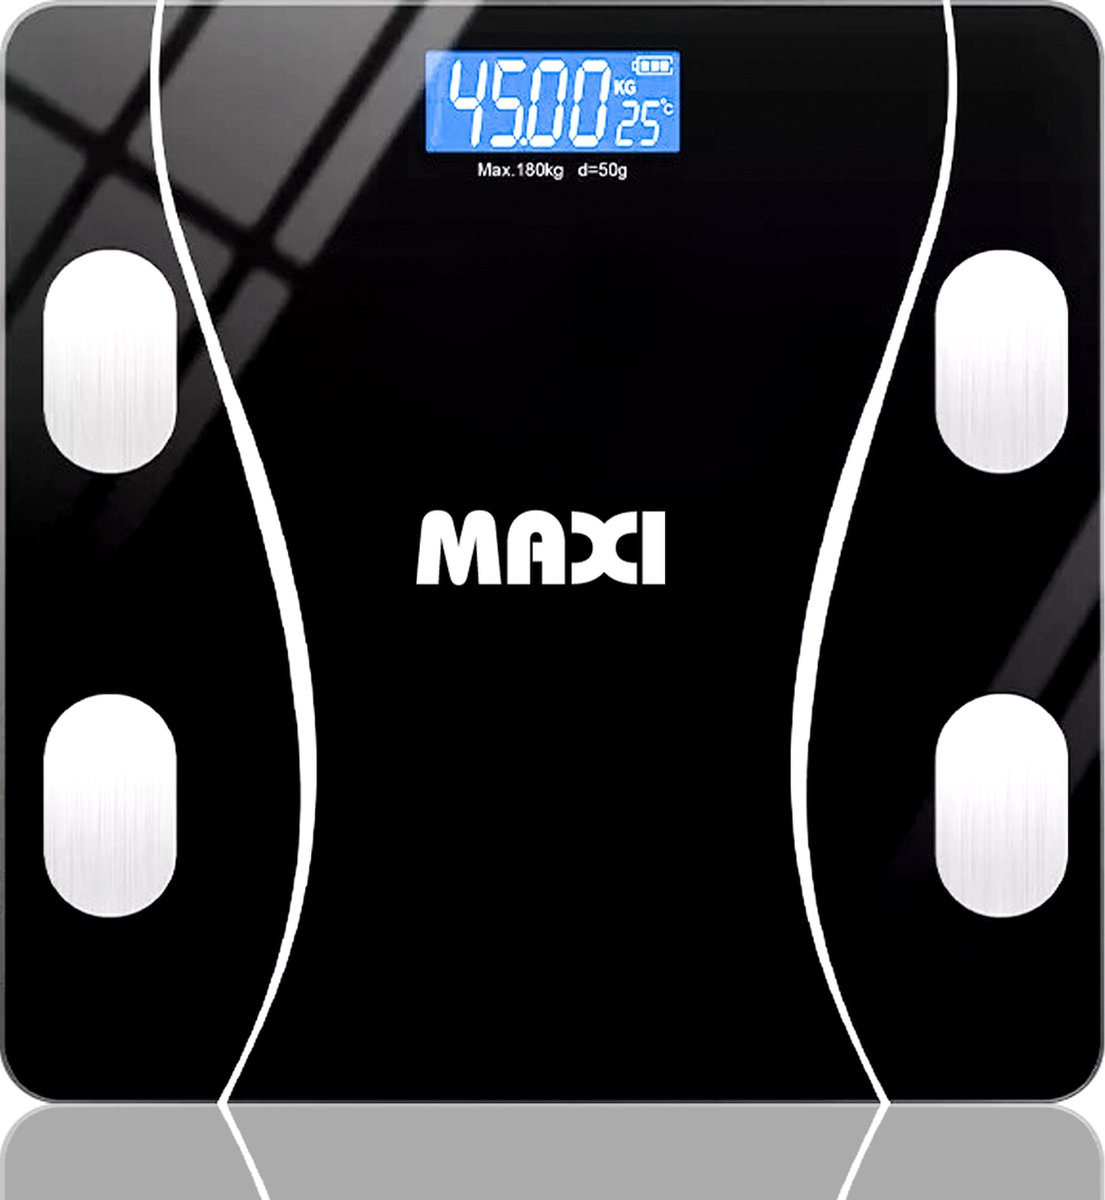 Maxi Nederland Maxi Smart Weegschaal Inclusief APP BMI VETPERCENTAGE SPIERMASSA Sporters Oplossing